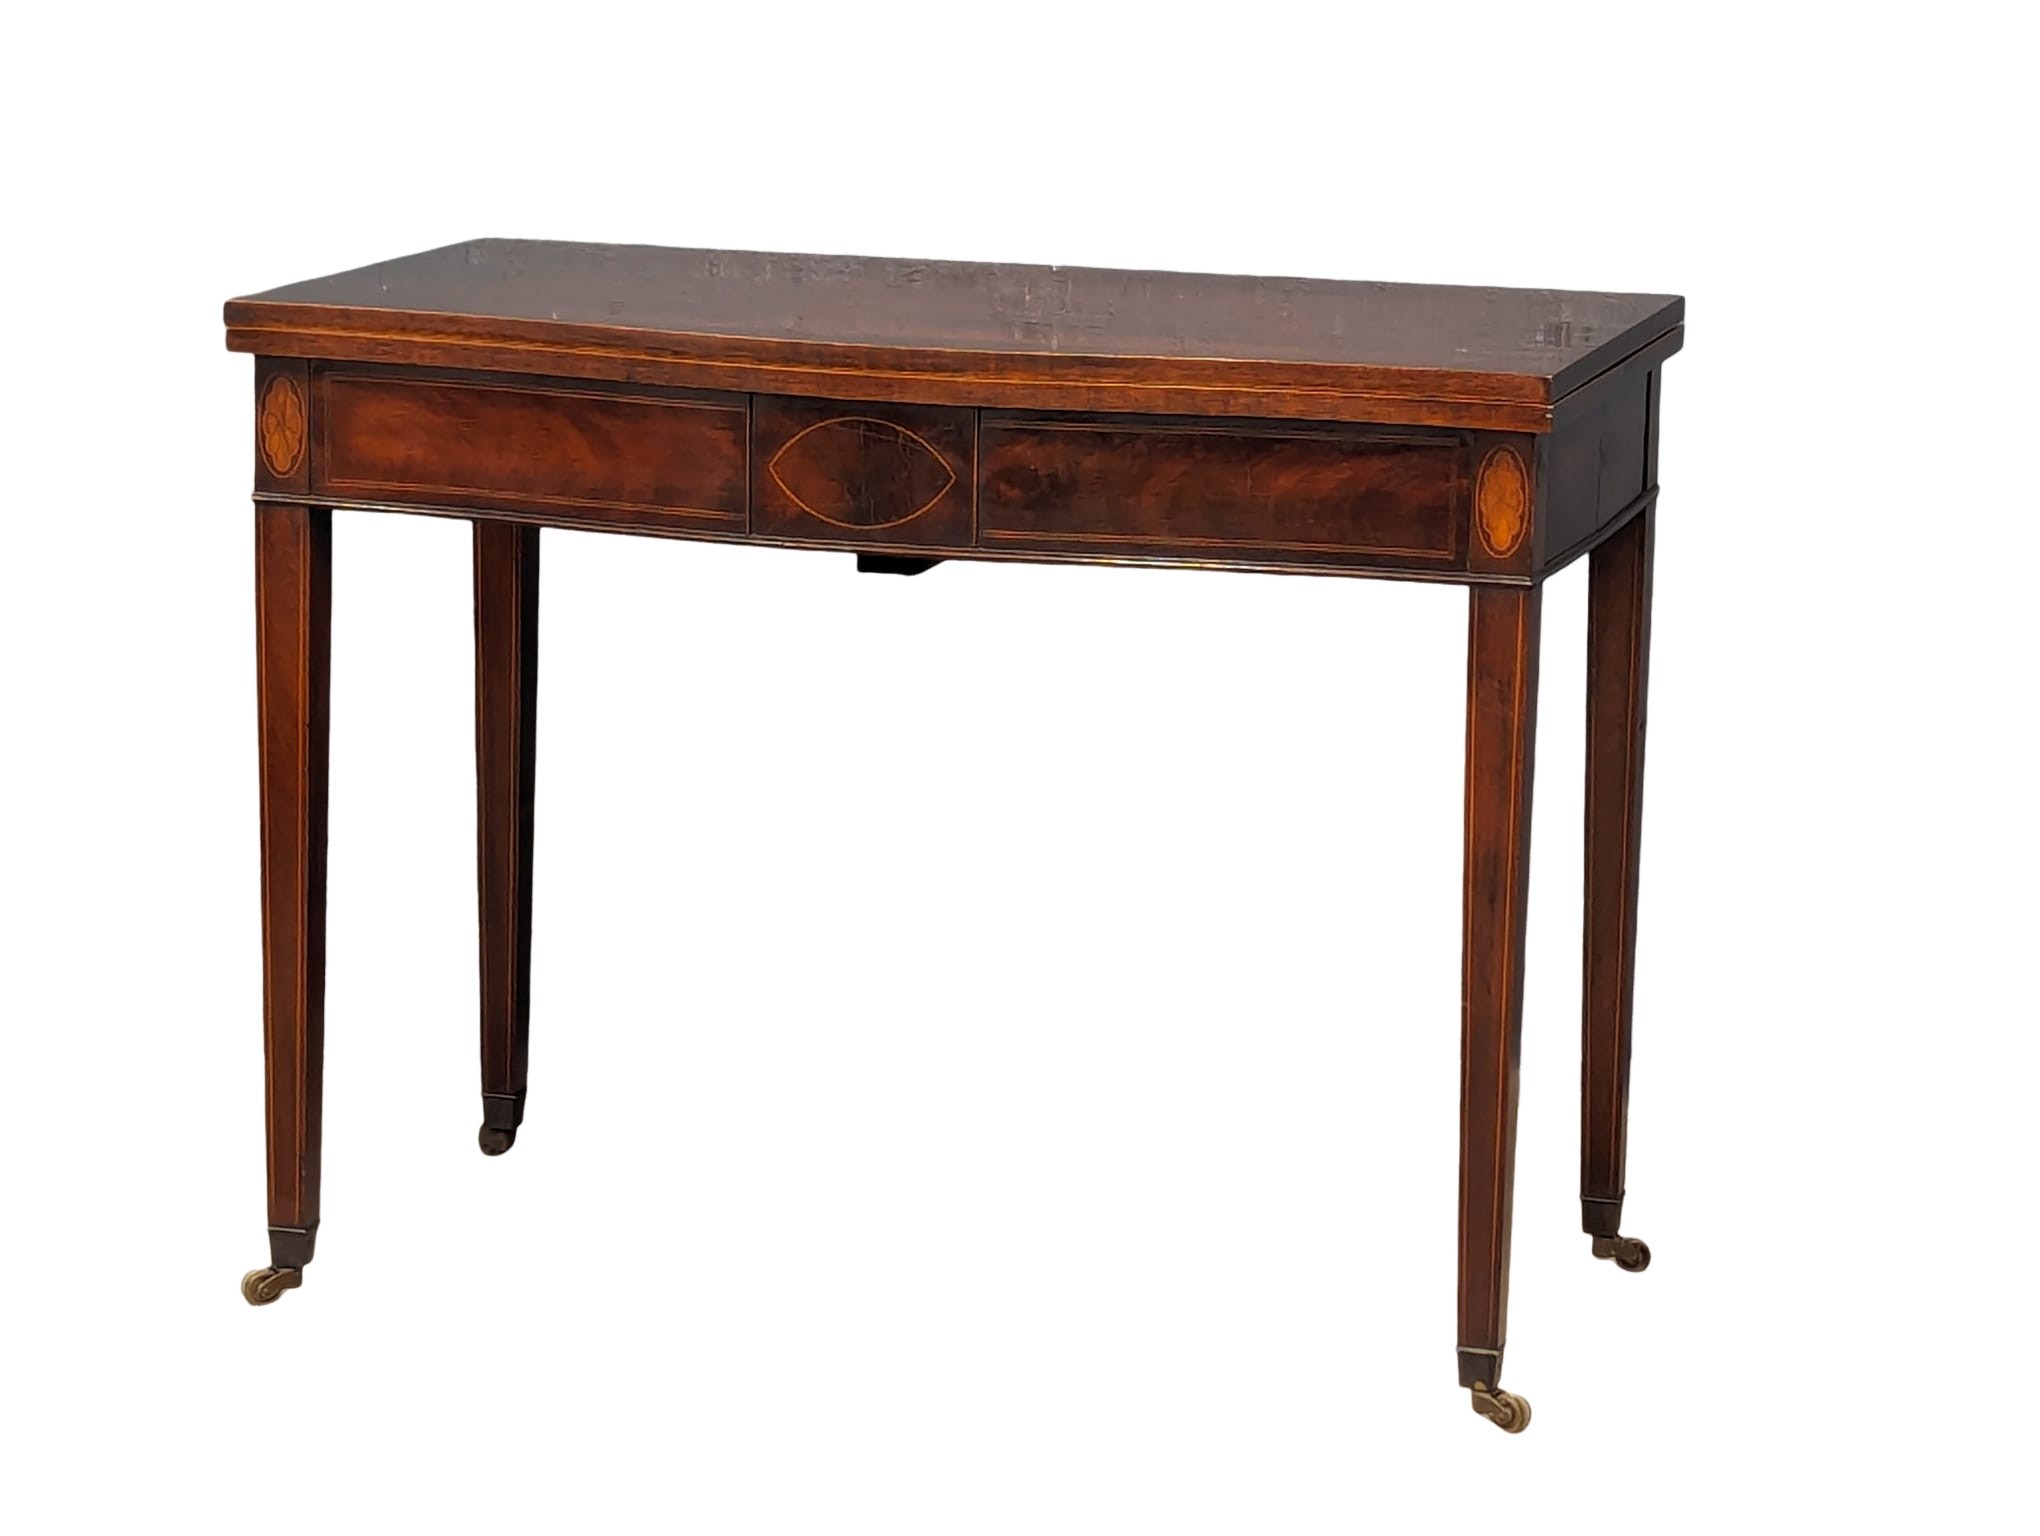 A Sheraton style inlaid mahogany turnover tea table/dining table